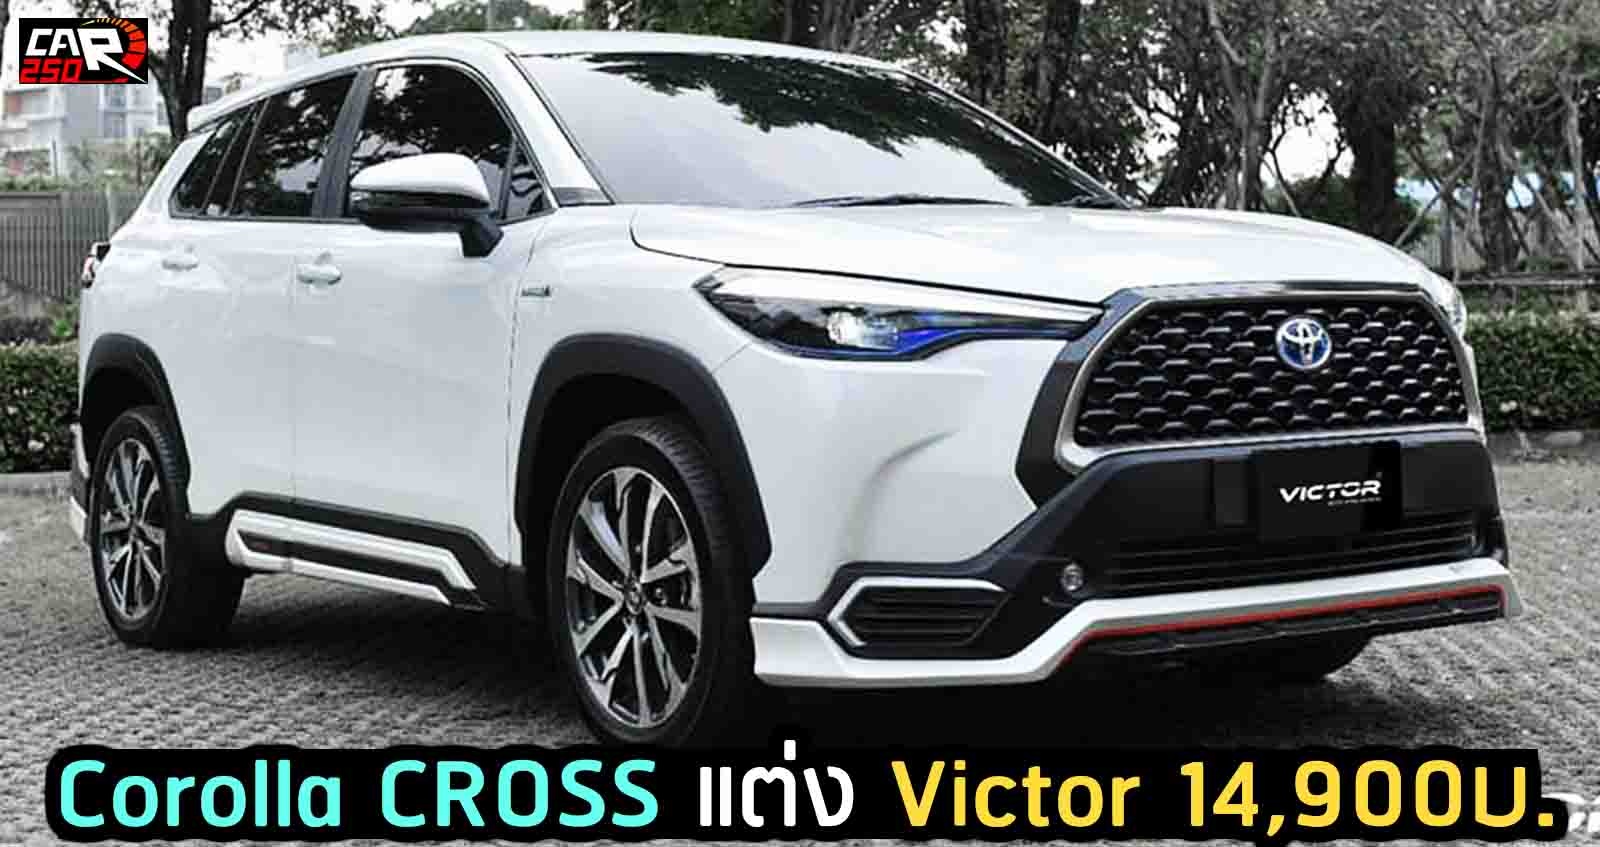 Corolla CROSS ชุดแต่ง Victor ราคา 14,900 บาท ในไทย